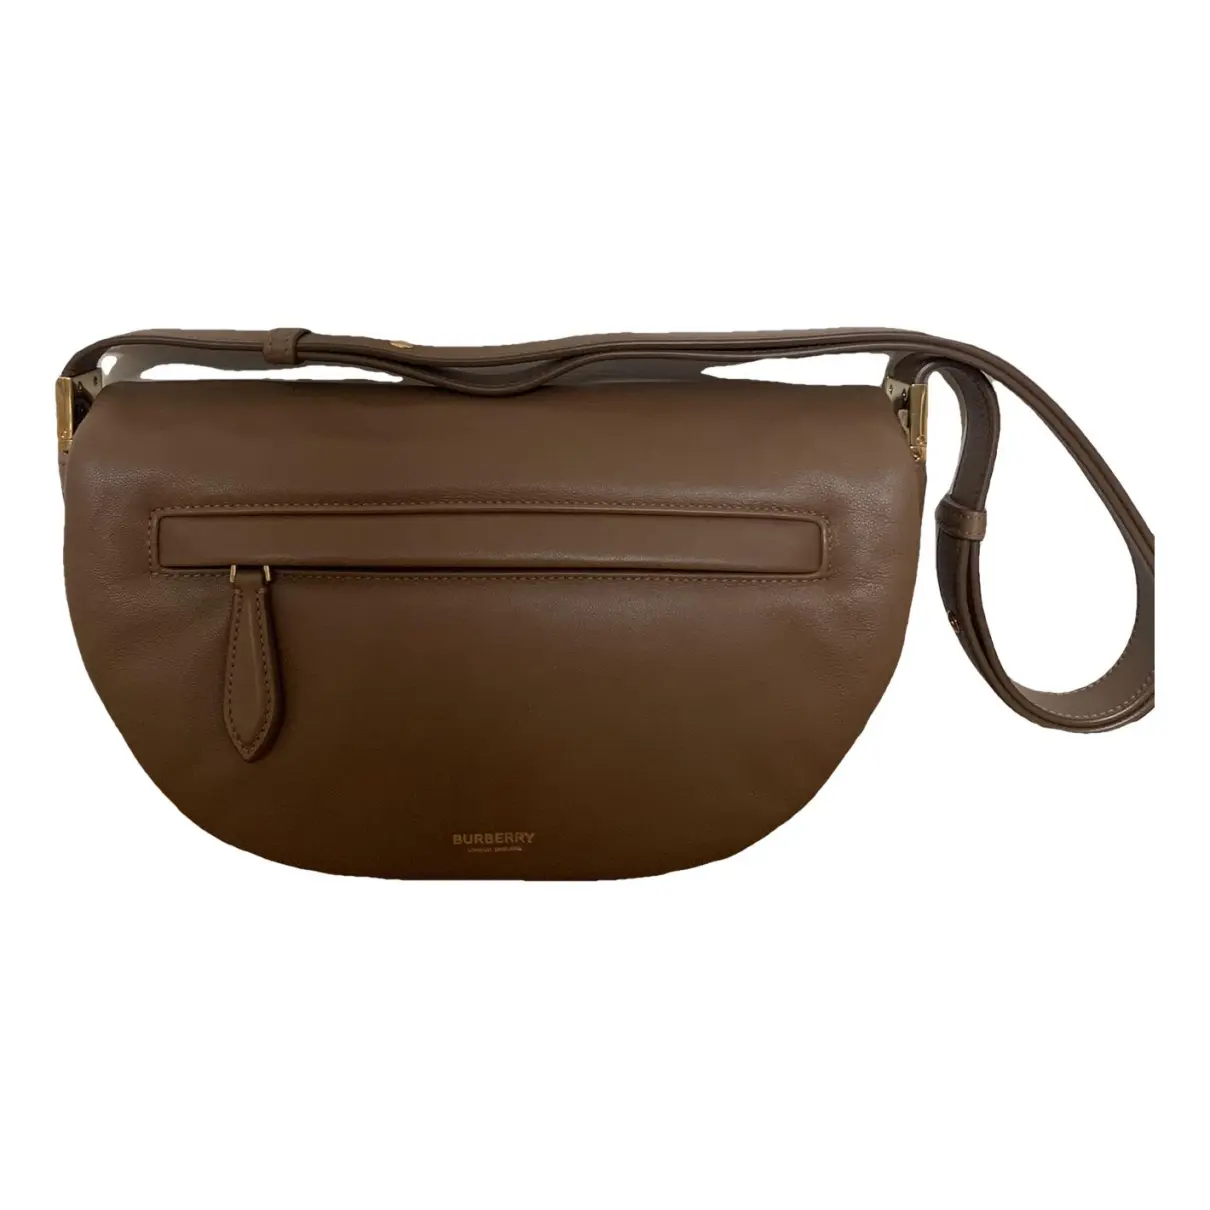 Olympia leather handbag